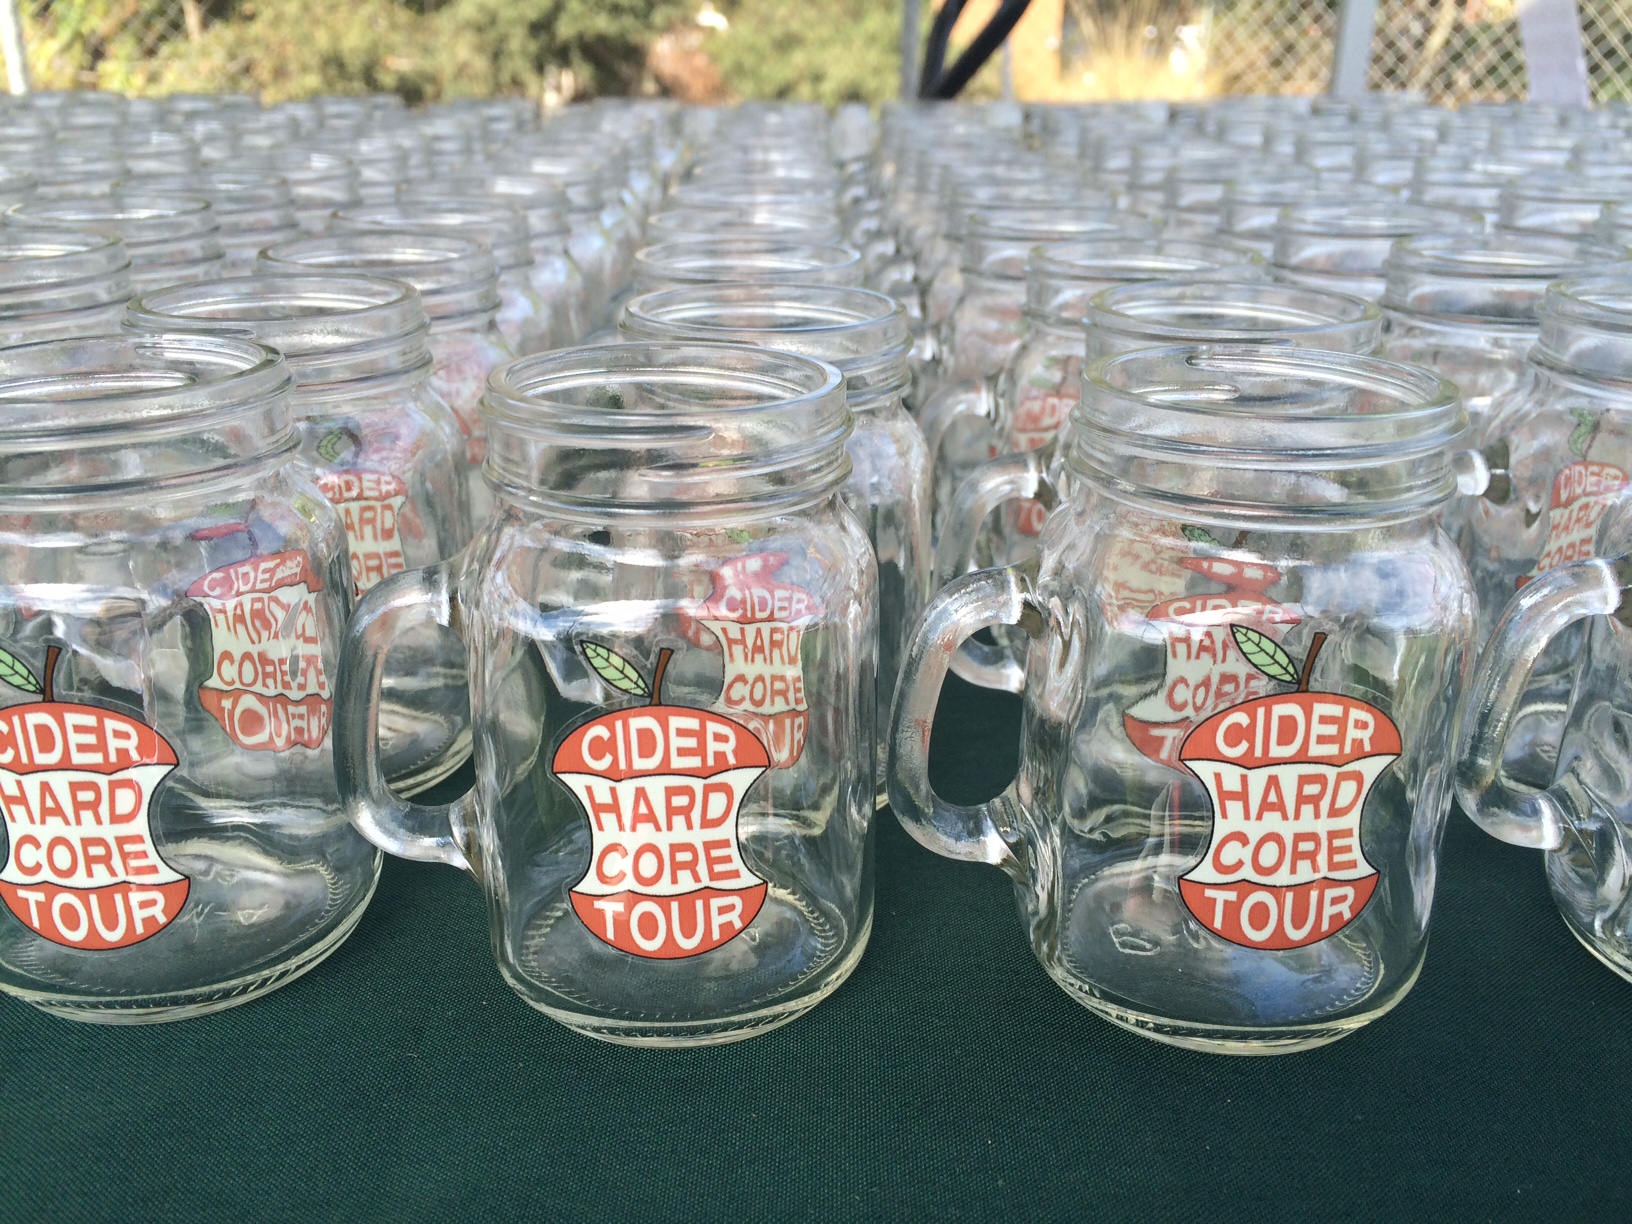 Hard Core Cider Tour tasting mugs